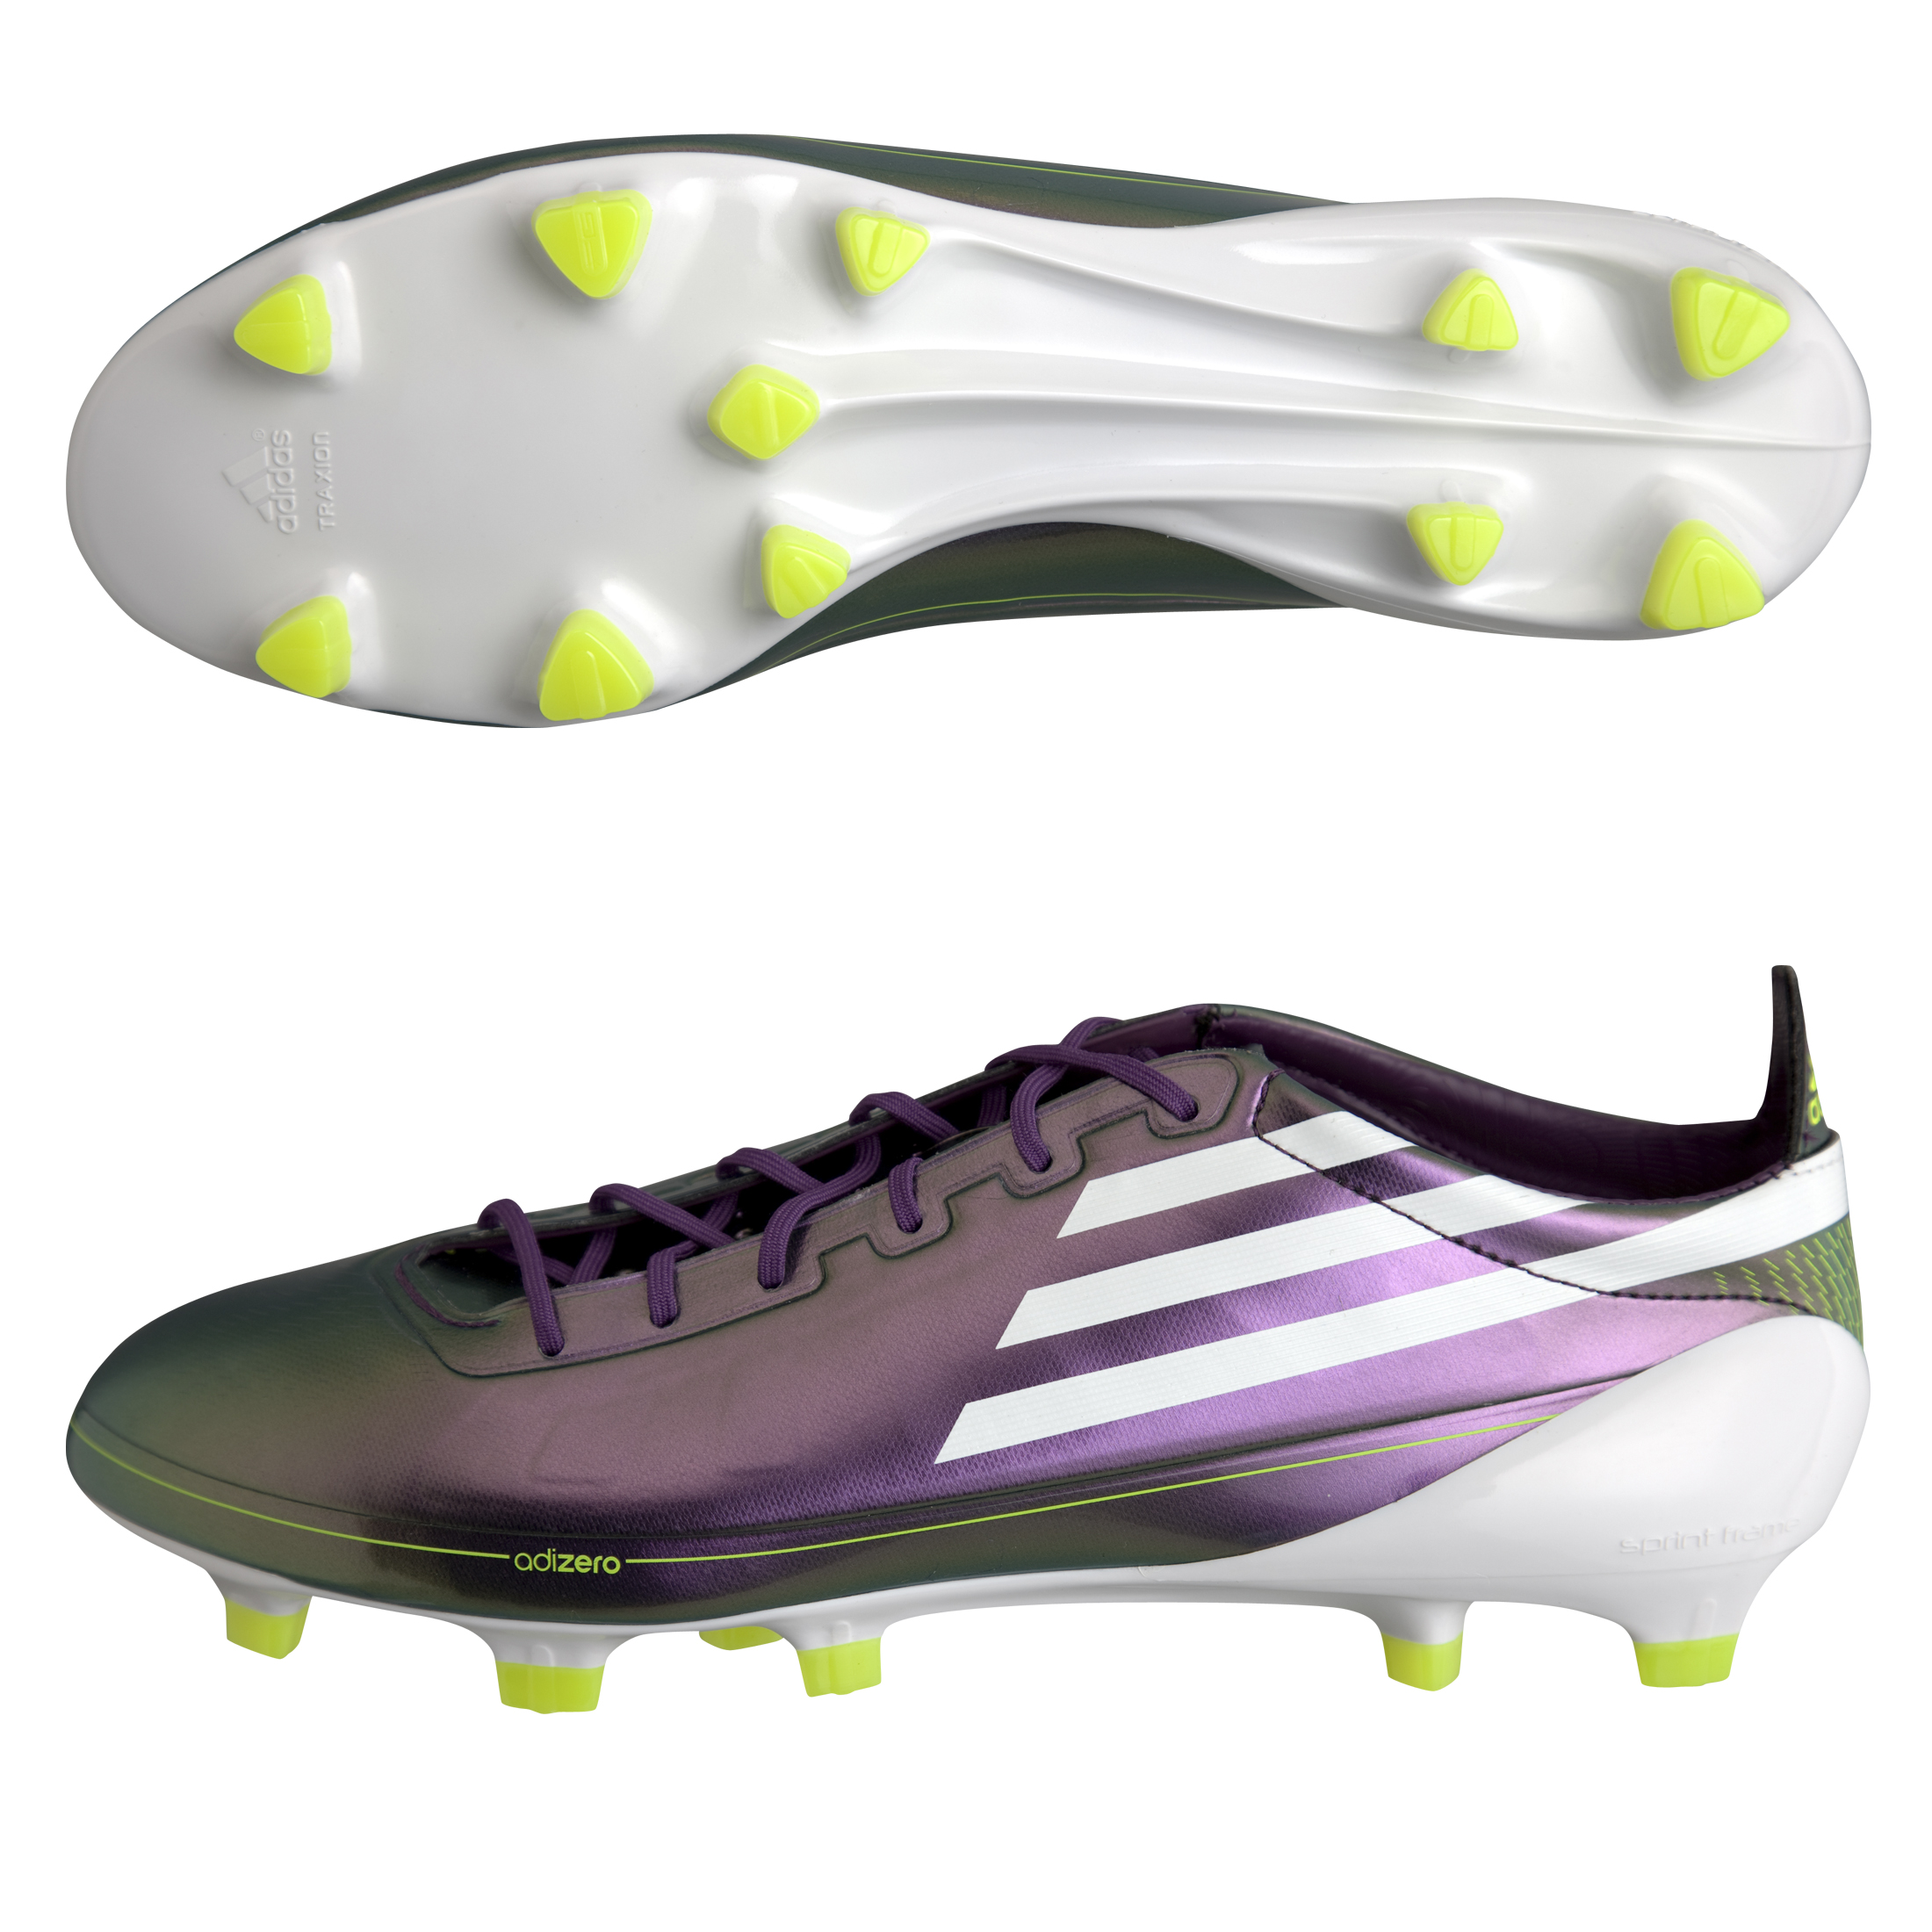 adidas F50 adizero TRX Firm Ground Synthetic Football Boots Chameleon PurpleWhiteElectricity